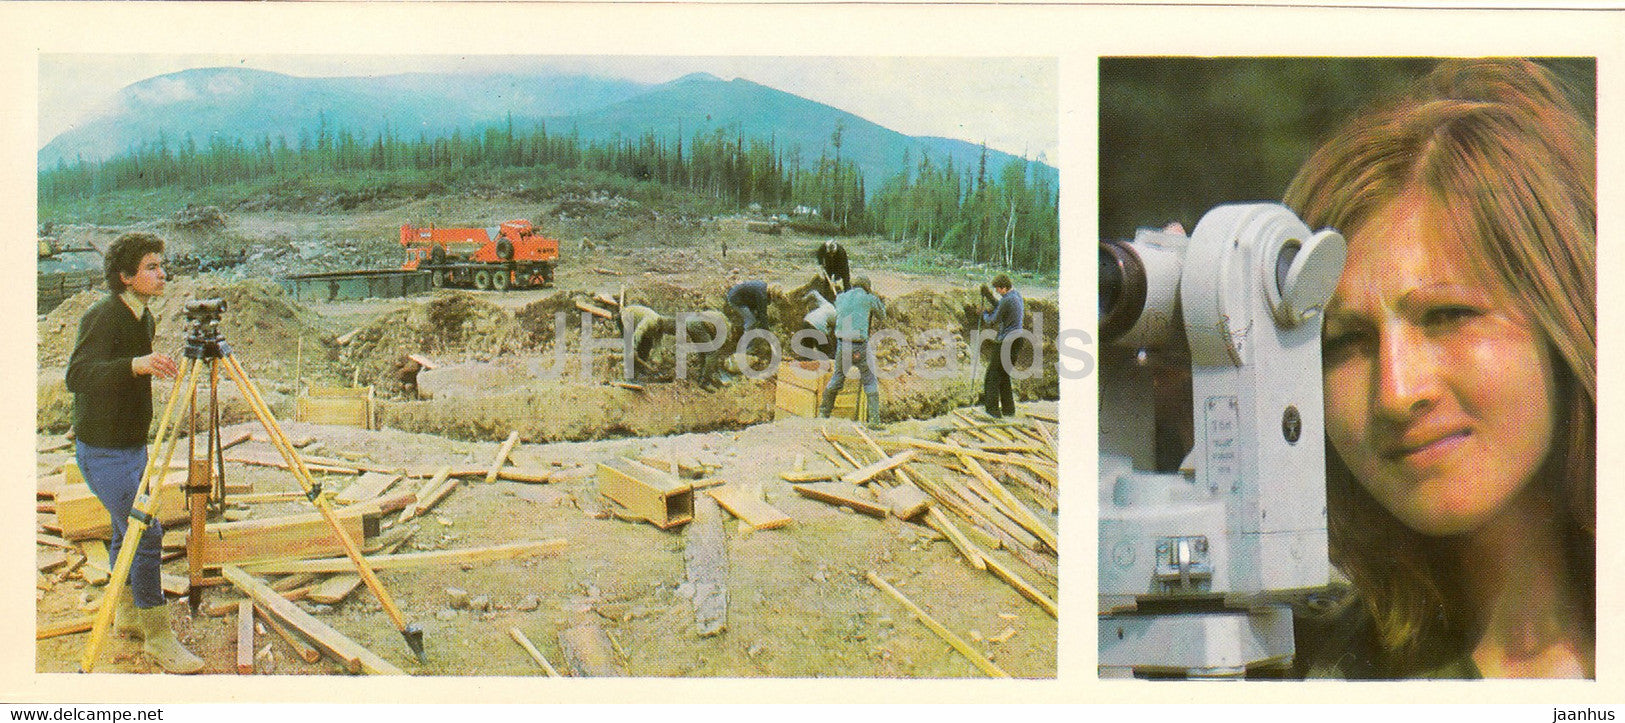 surveyor - 1 - BAM - Baikal-Amur Mainline , construction of the railway - 1978 - Russia USSR - unused - JH Postcards